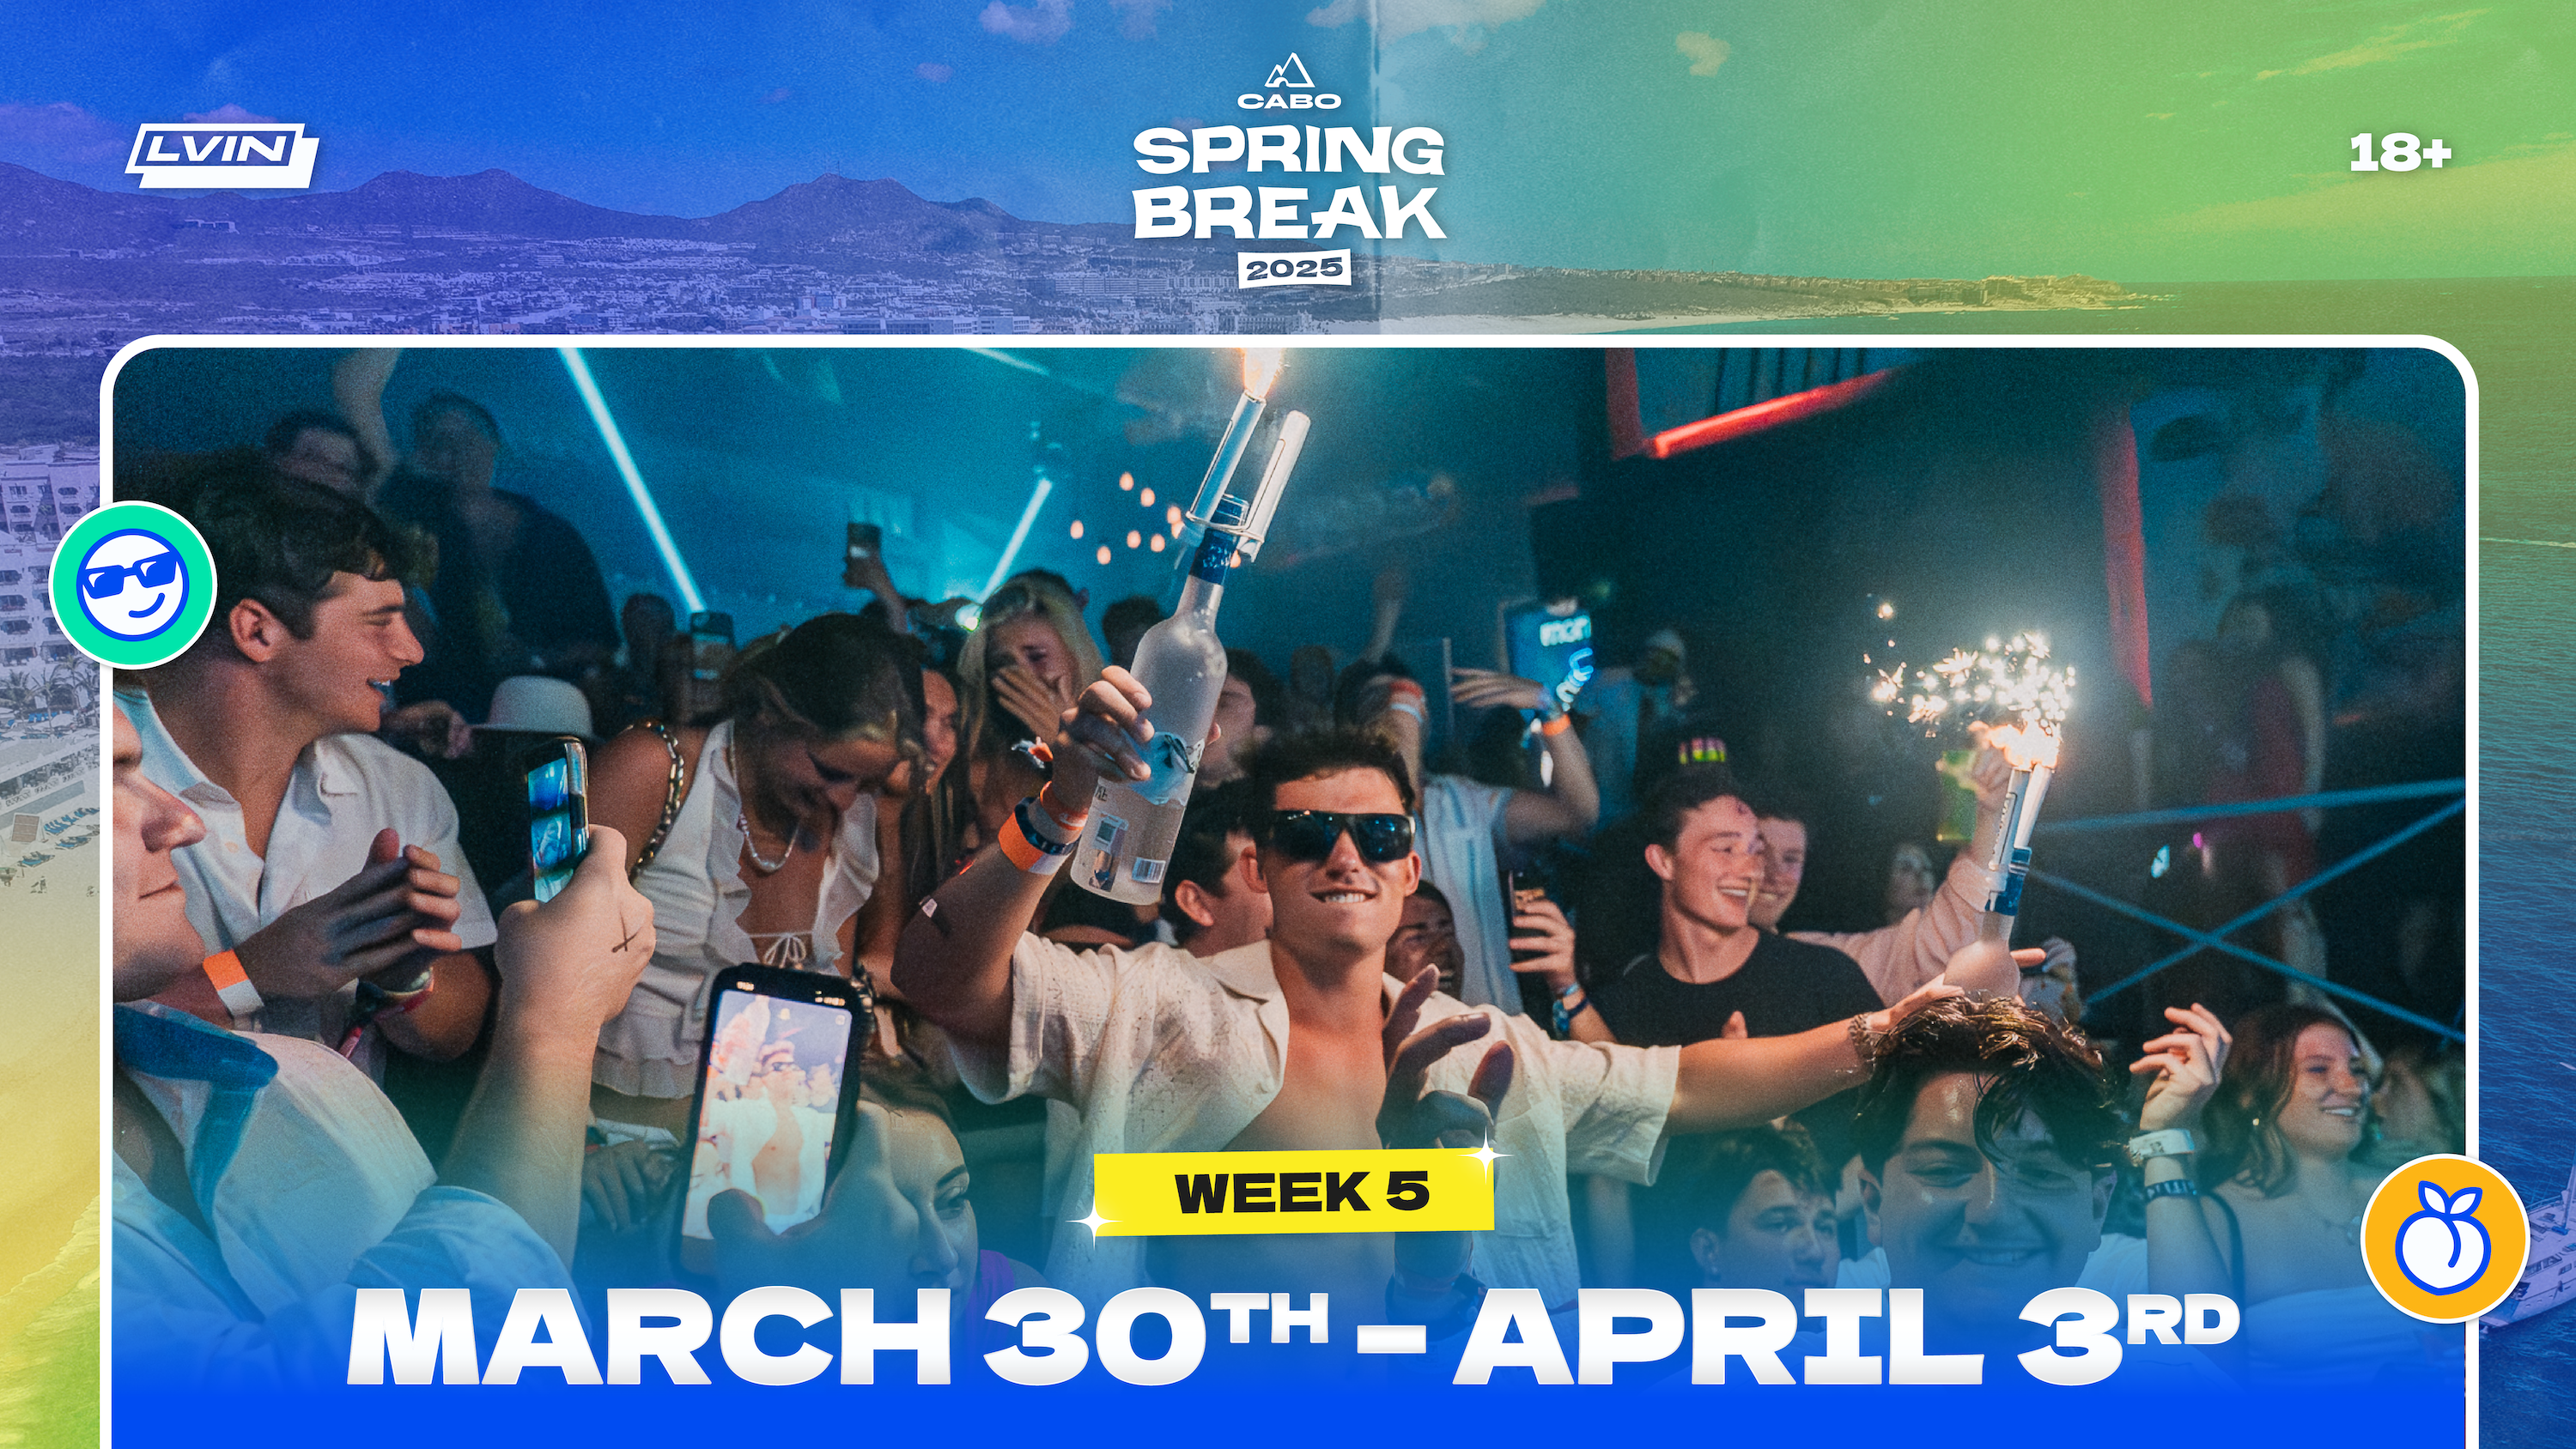 Cabo Spring Break 2025 Week 5 Header March 30 to April 3 LVIN